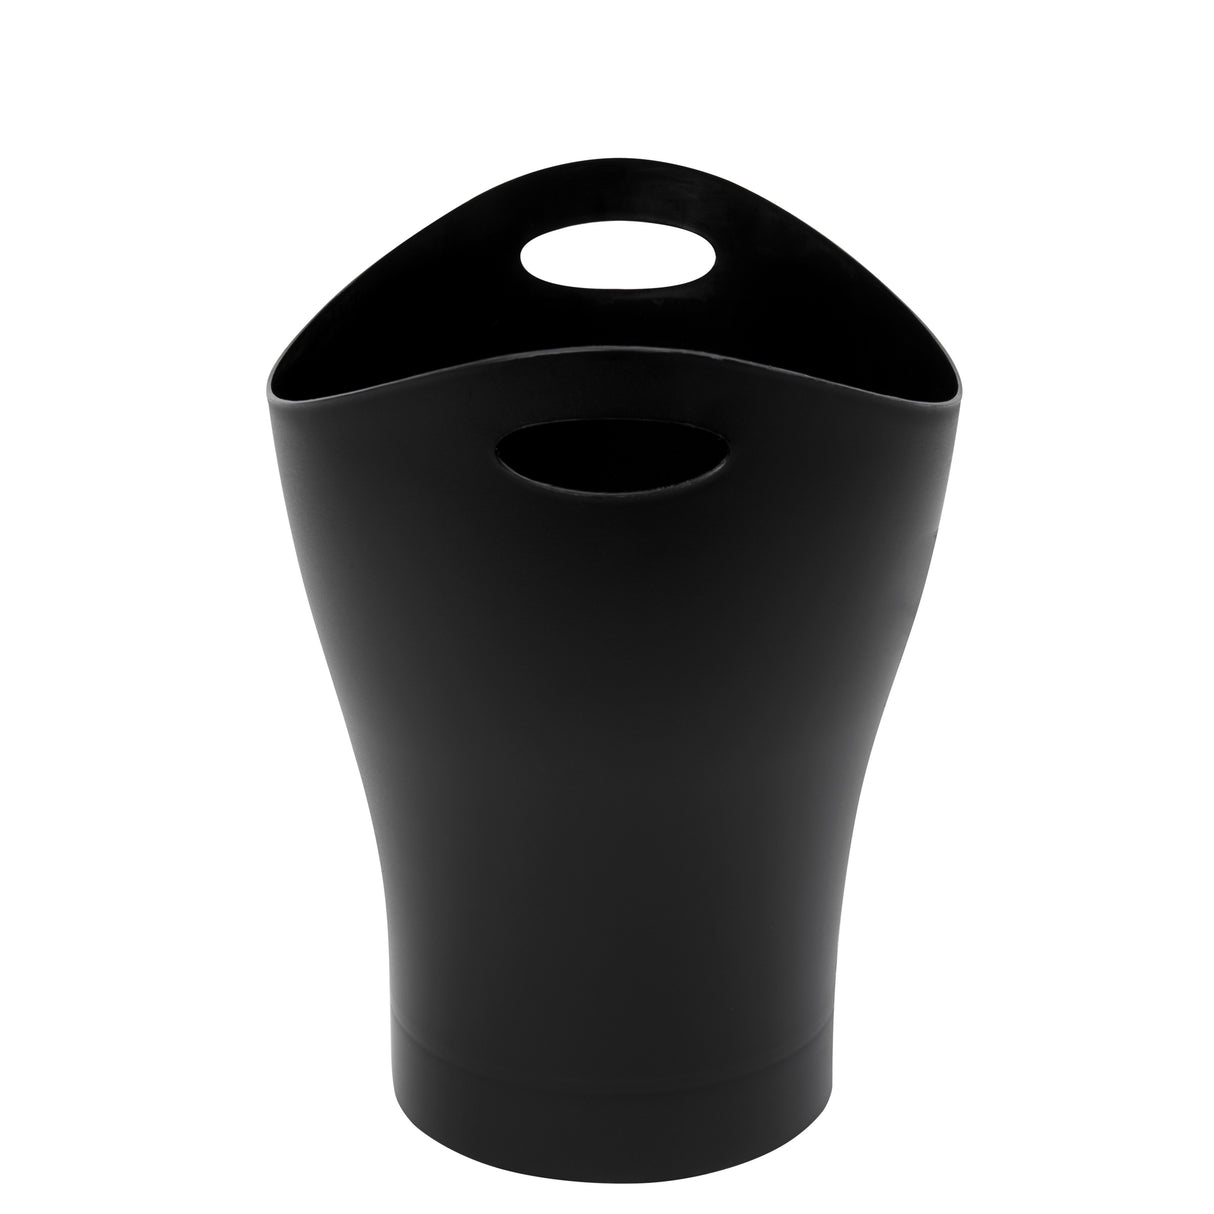 Umbra Garbino Trash Can (2.25-Gallon, Black) 5-pack